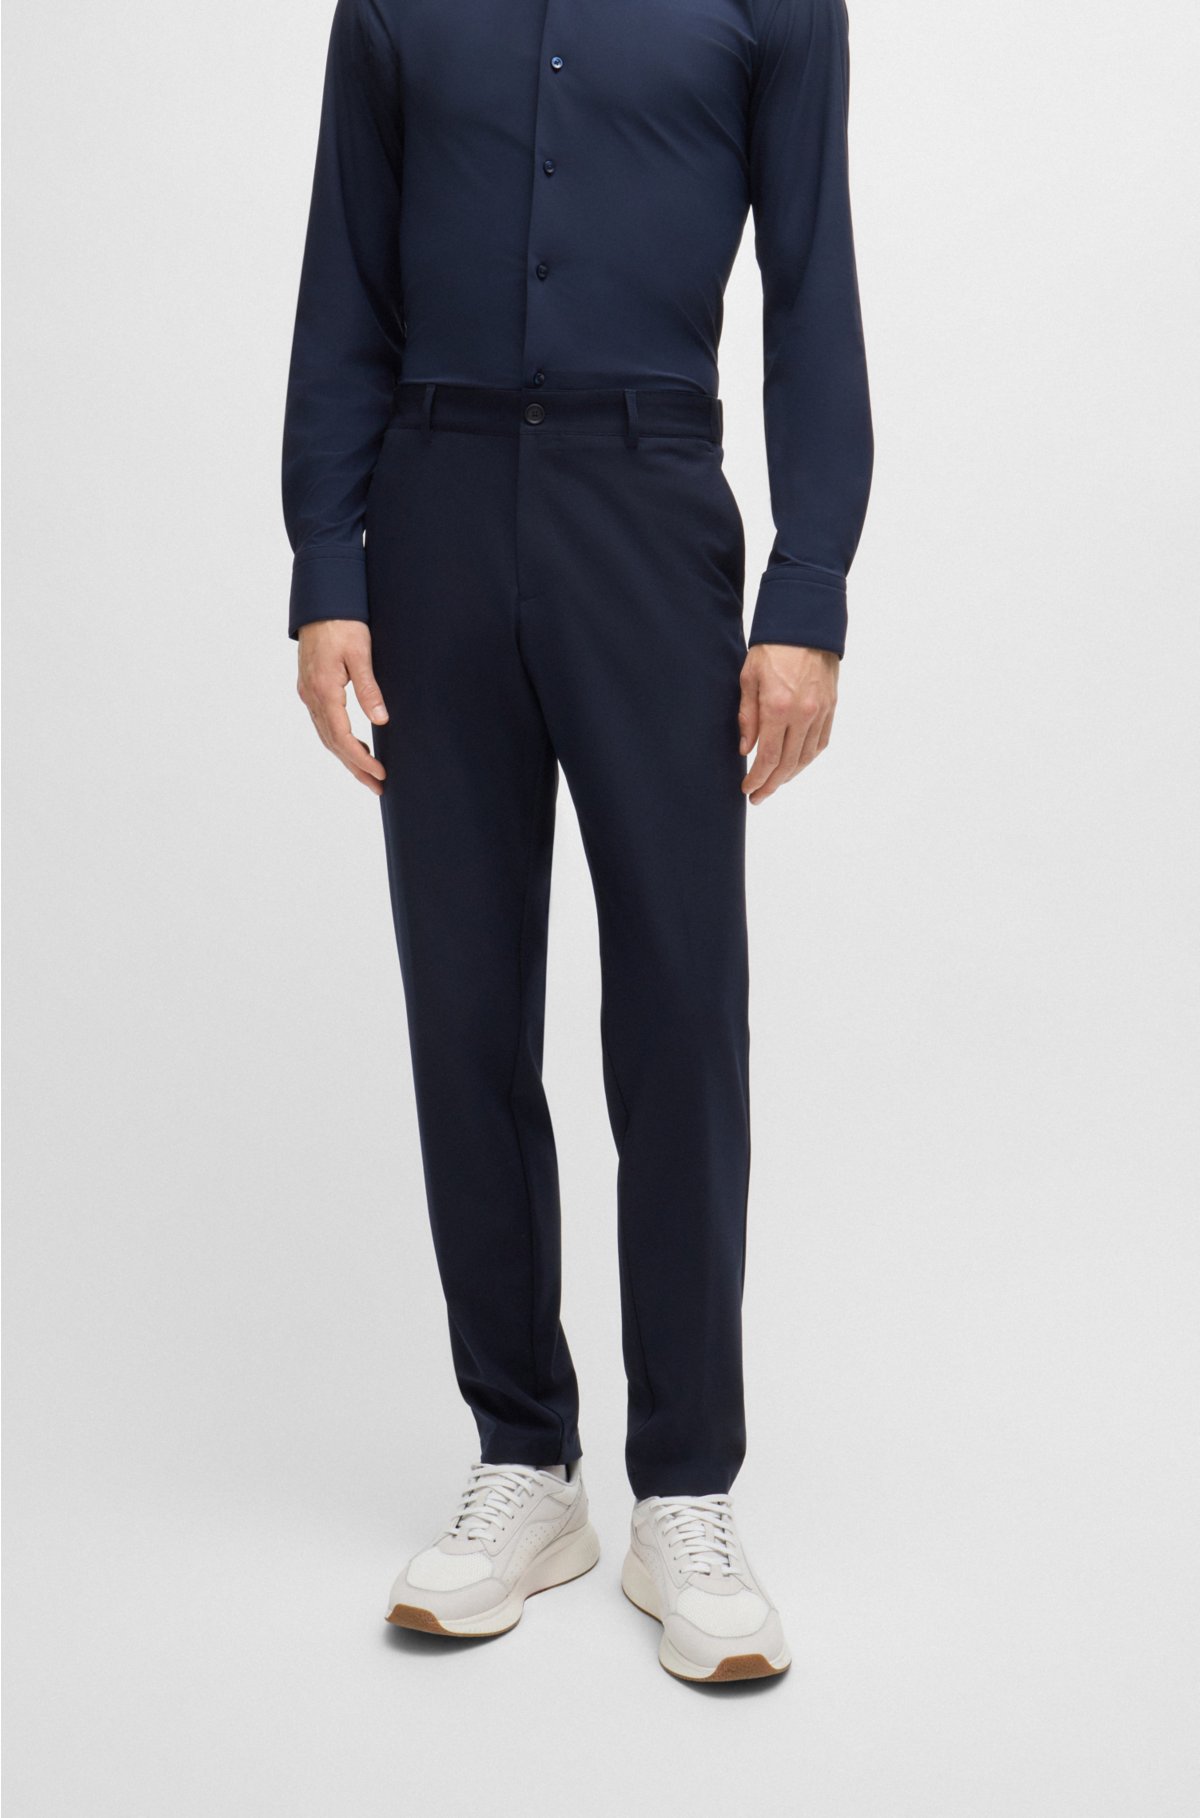 Tek Gear 100% Polyester Blue Active Pants Size XL - 48% off